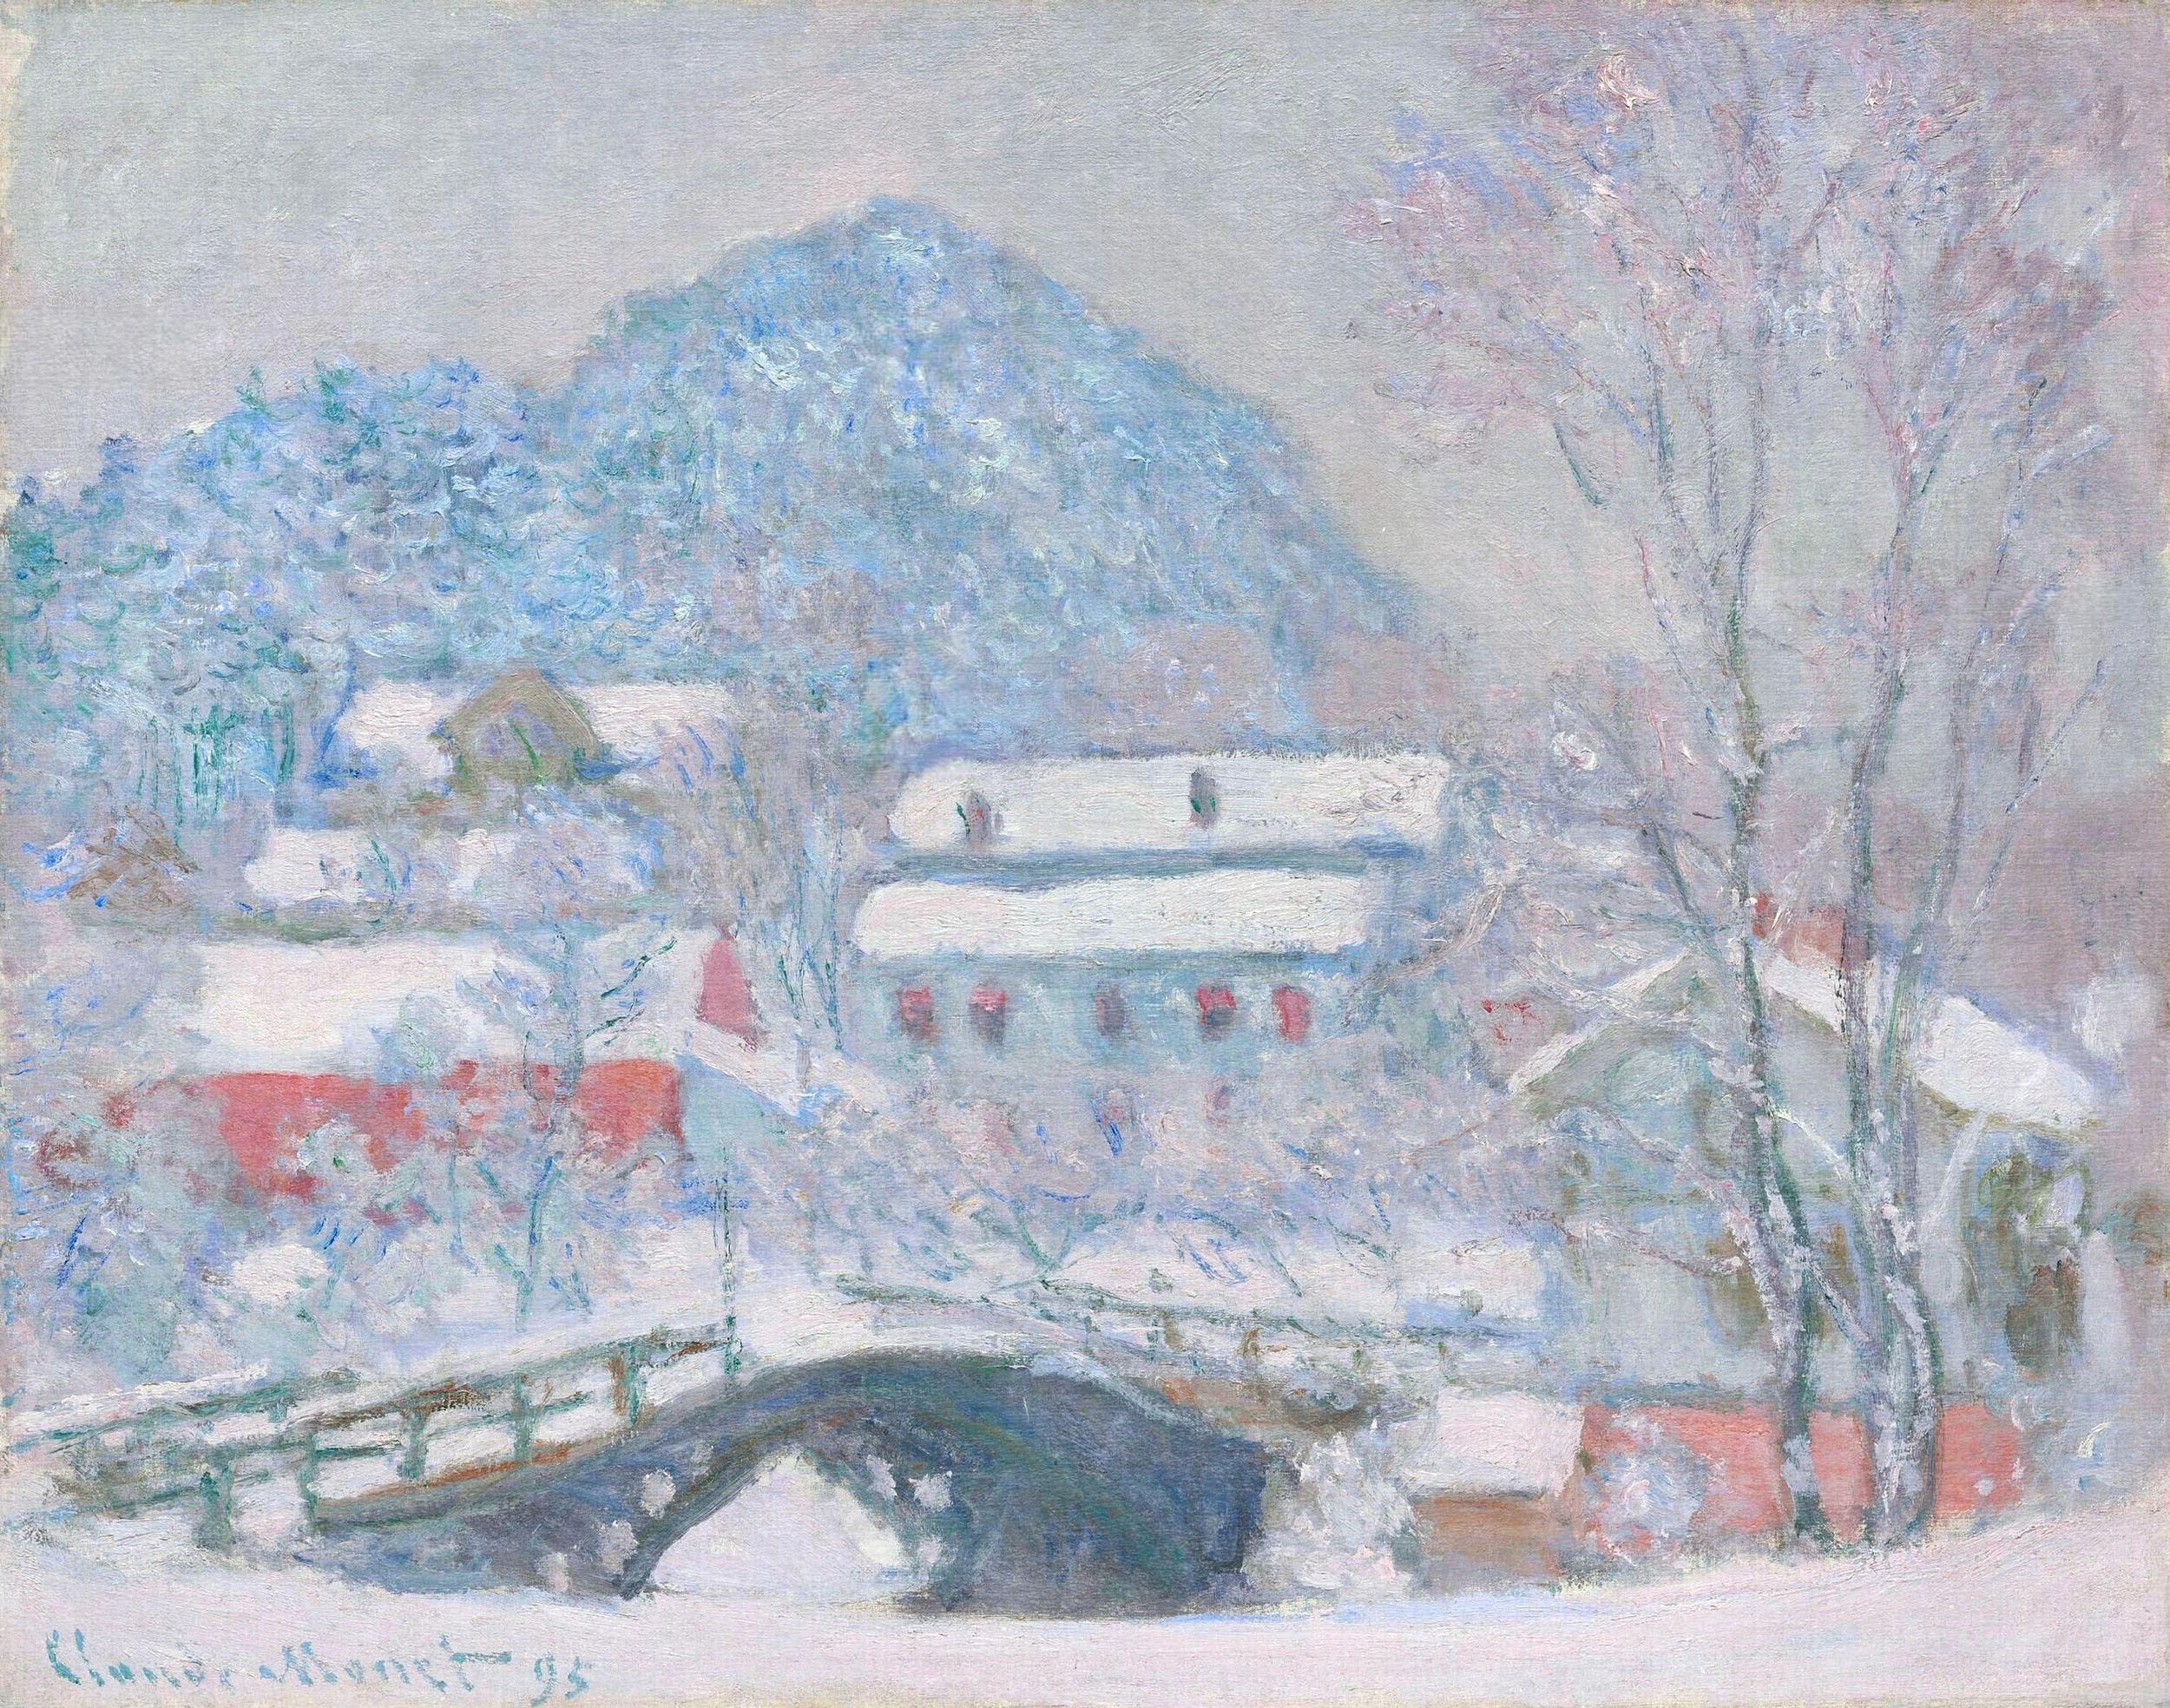 Norway, Sandviken Village in the Snow, Claude Monet